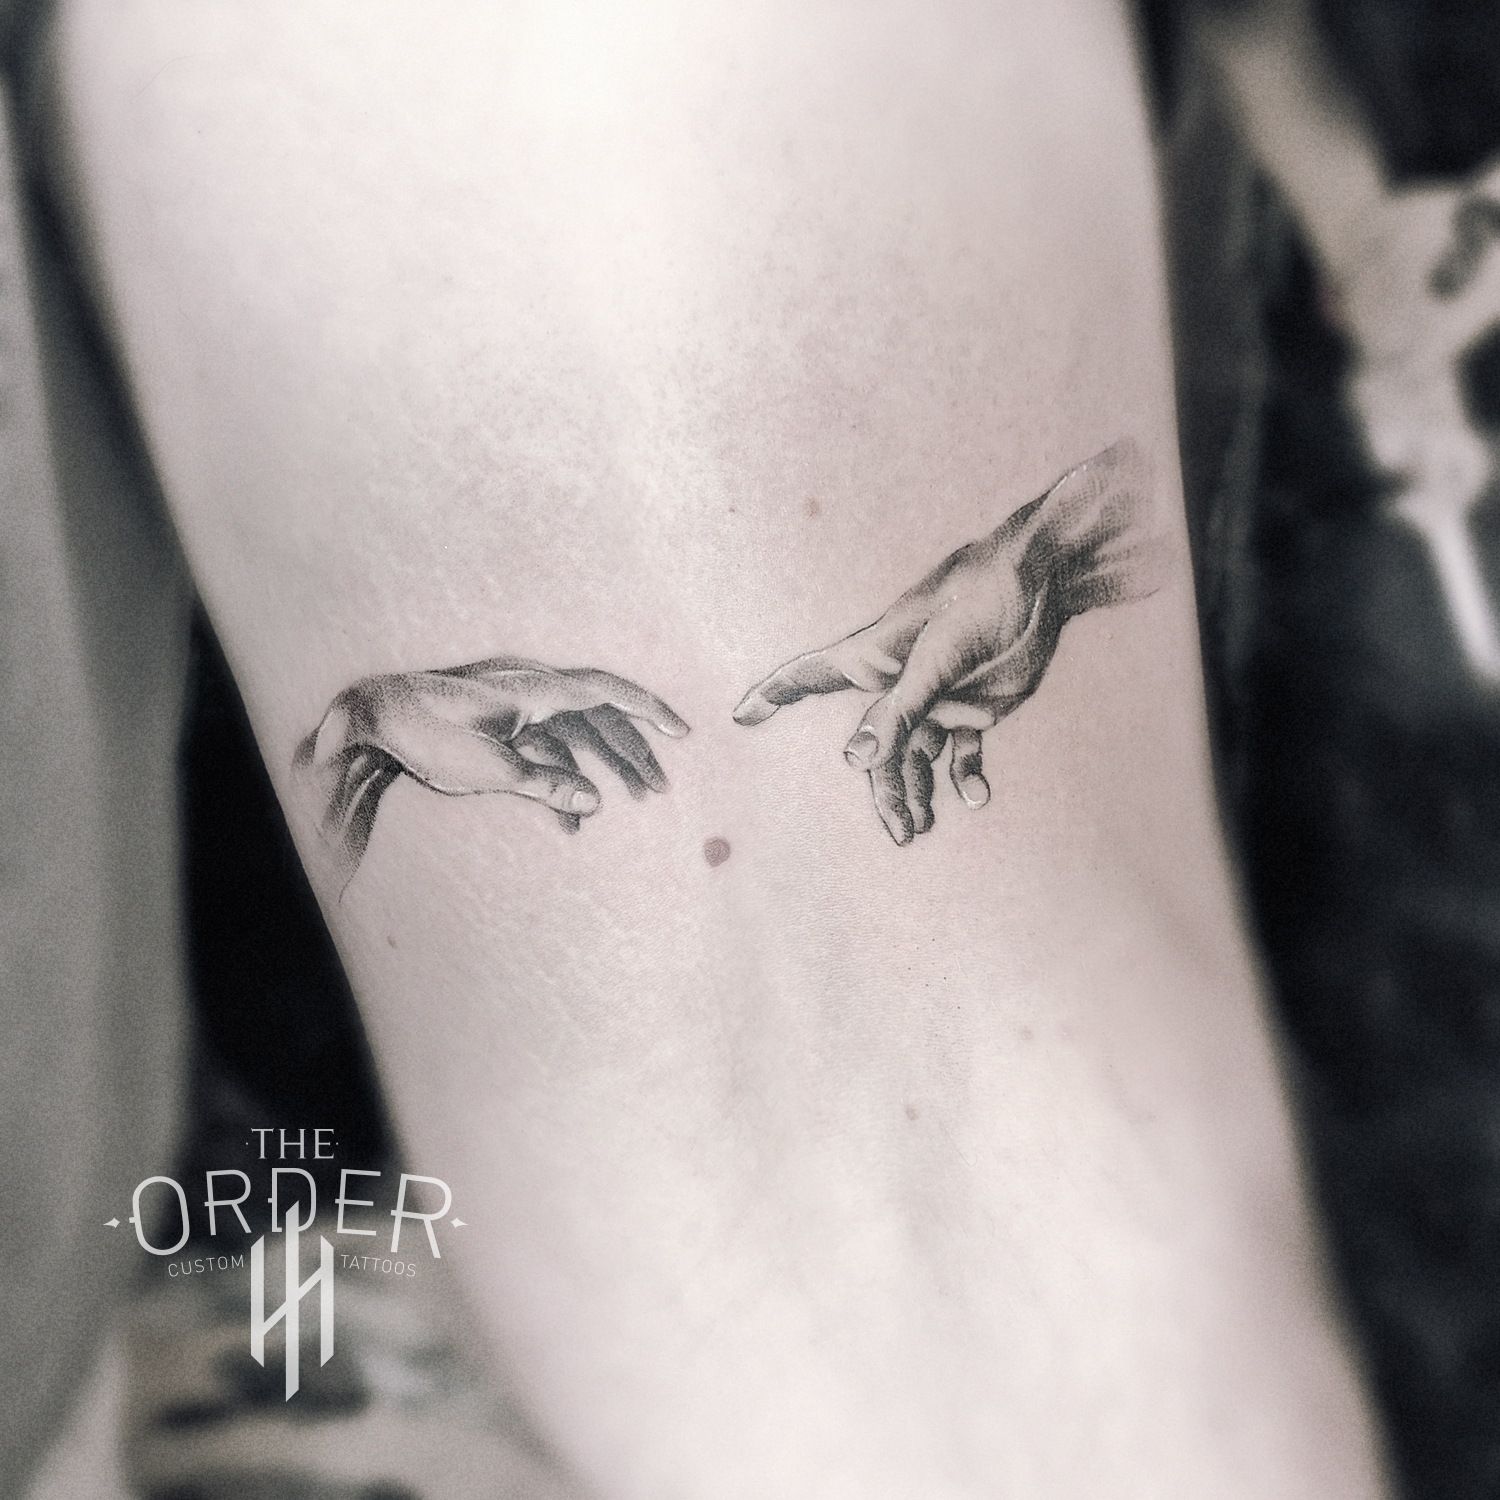 Hands Of God Tattoo – The Order Custom Tattoos